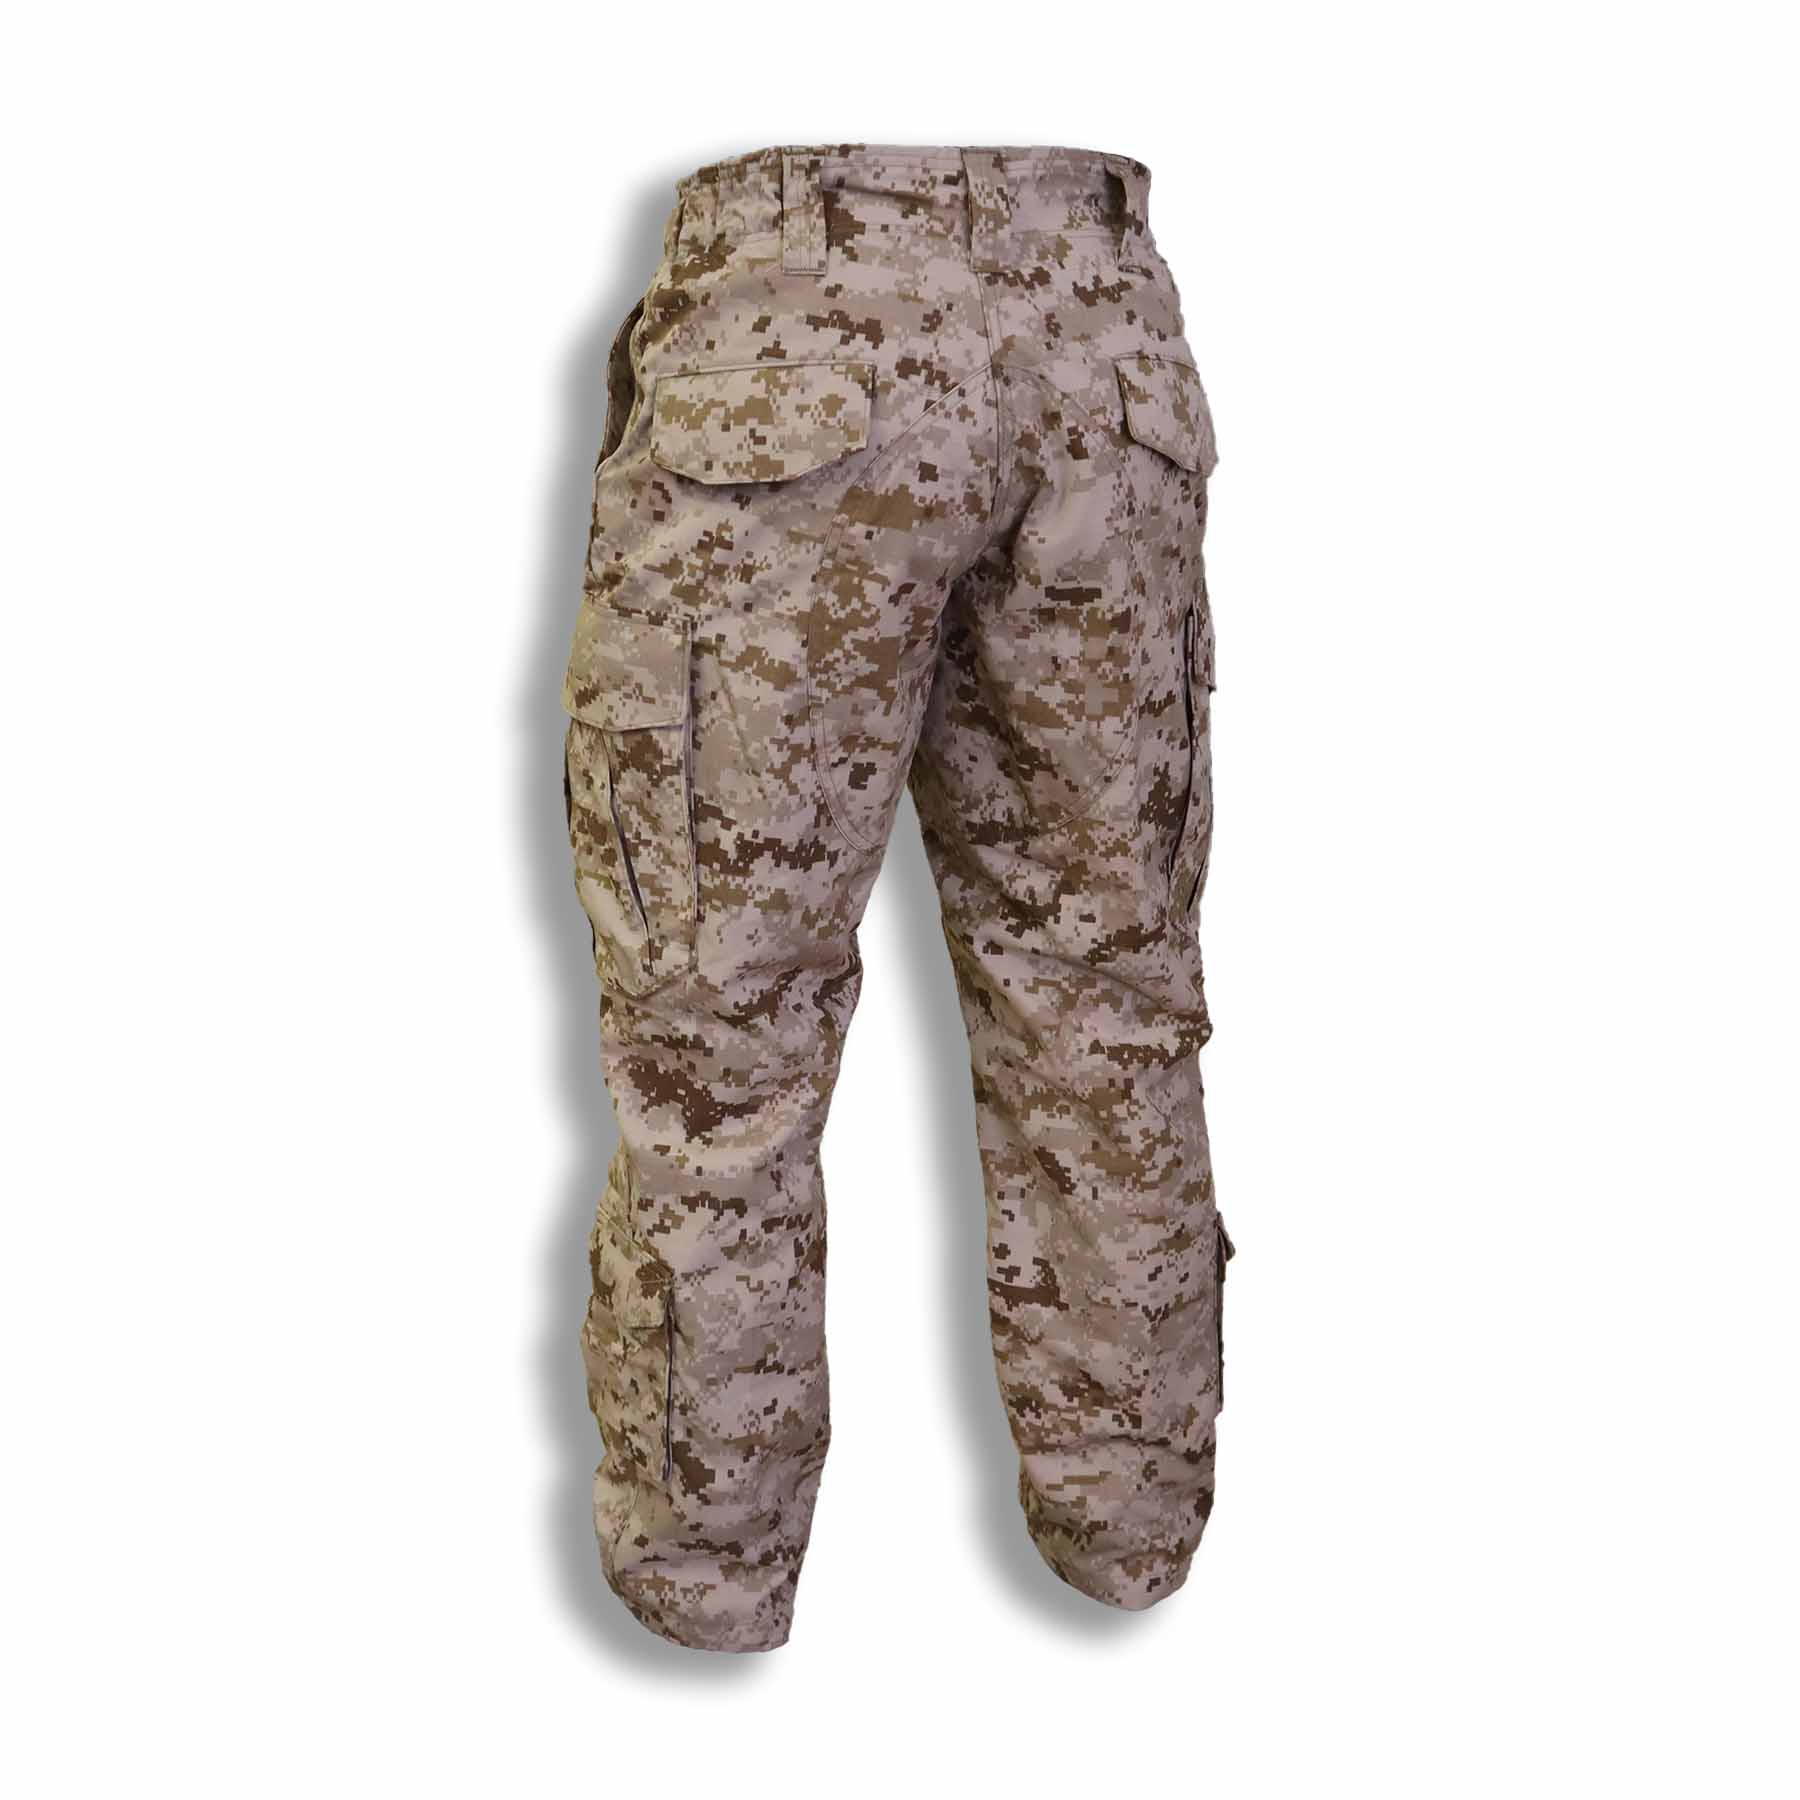 Liberty Uniform Men's Trousers (Blue Navy) | LIB-609MNV